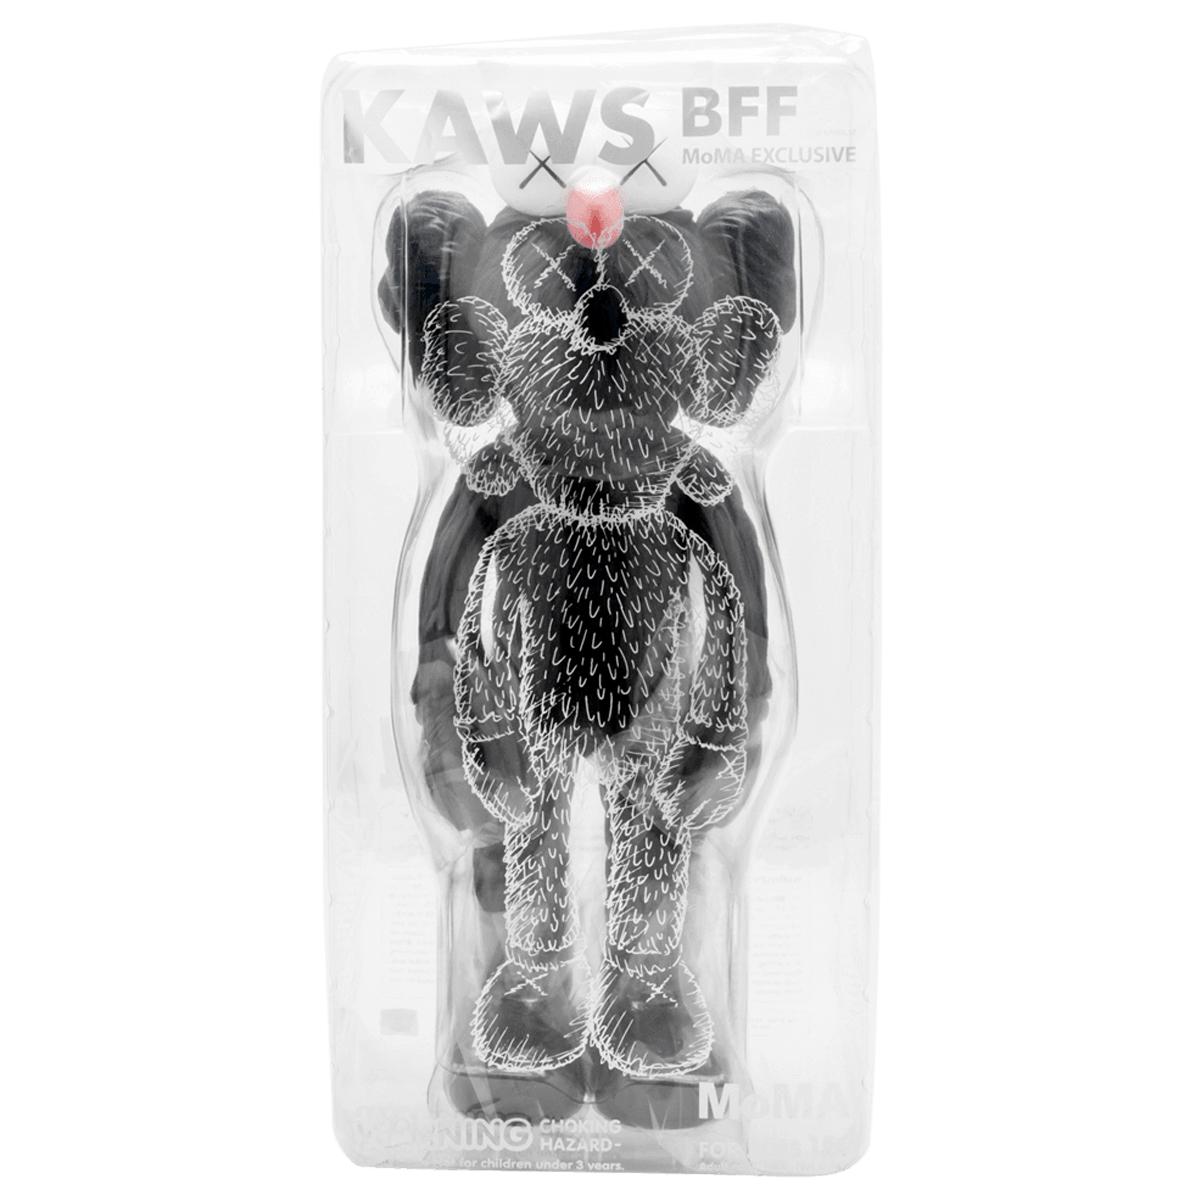 KAWS: BFF (Black) - Original Vinyl Sculpture, Street art, Pop Art. MOMA sold out 2